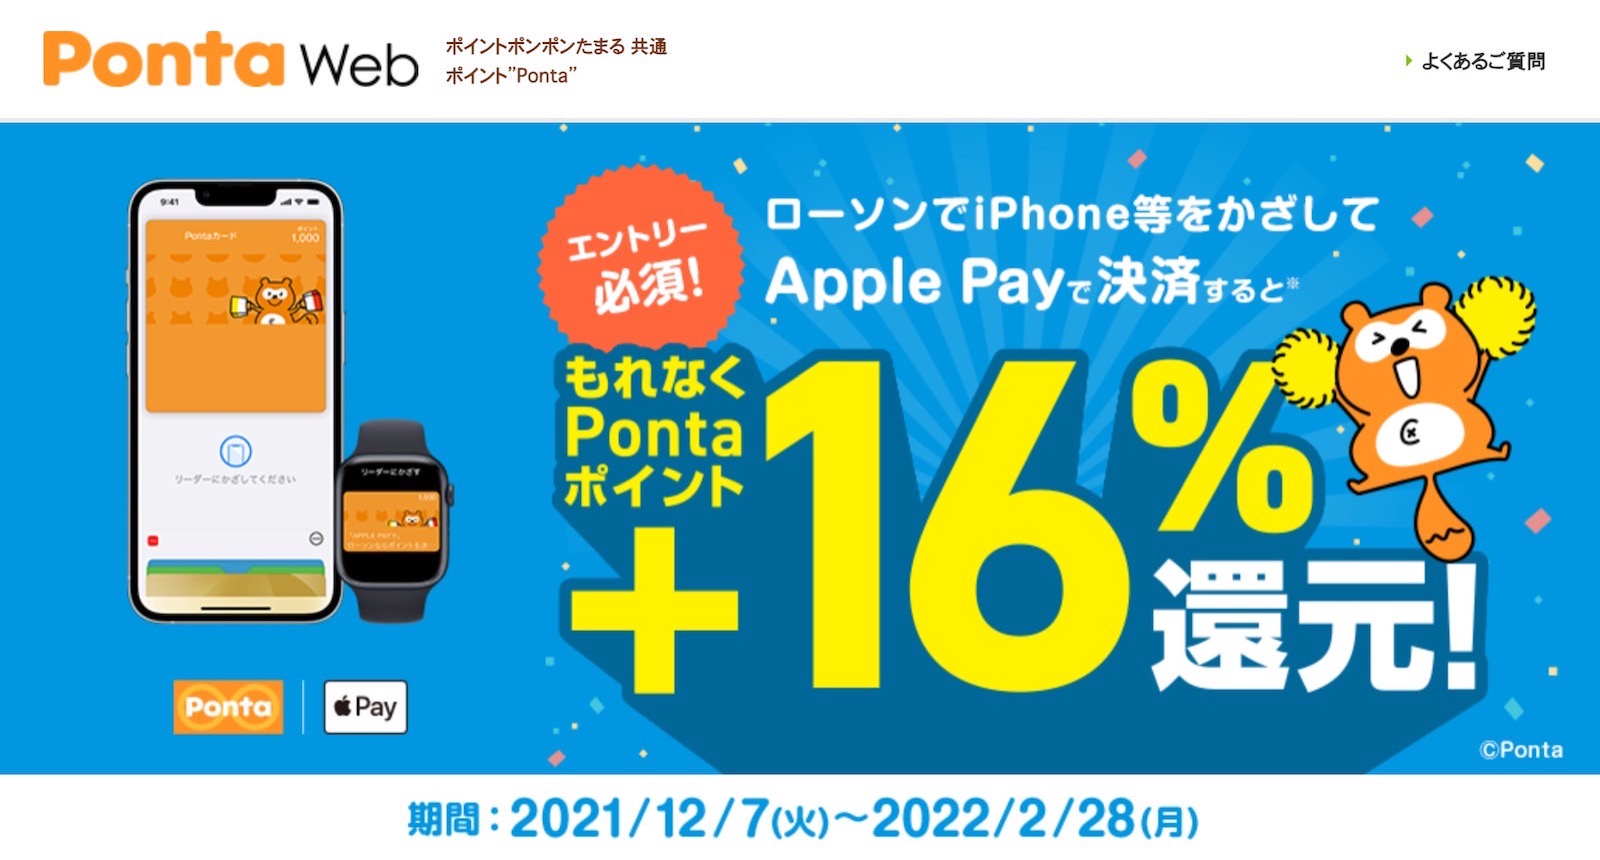 Lawson ponta apple pay campaign